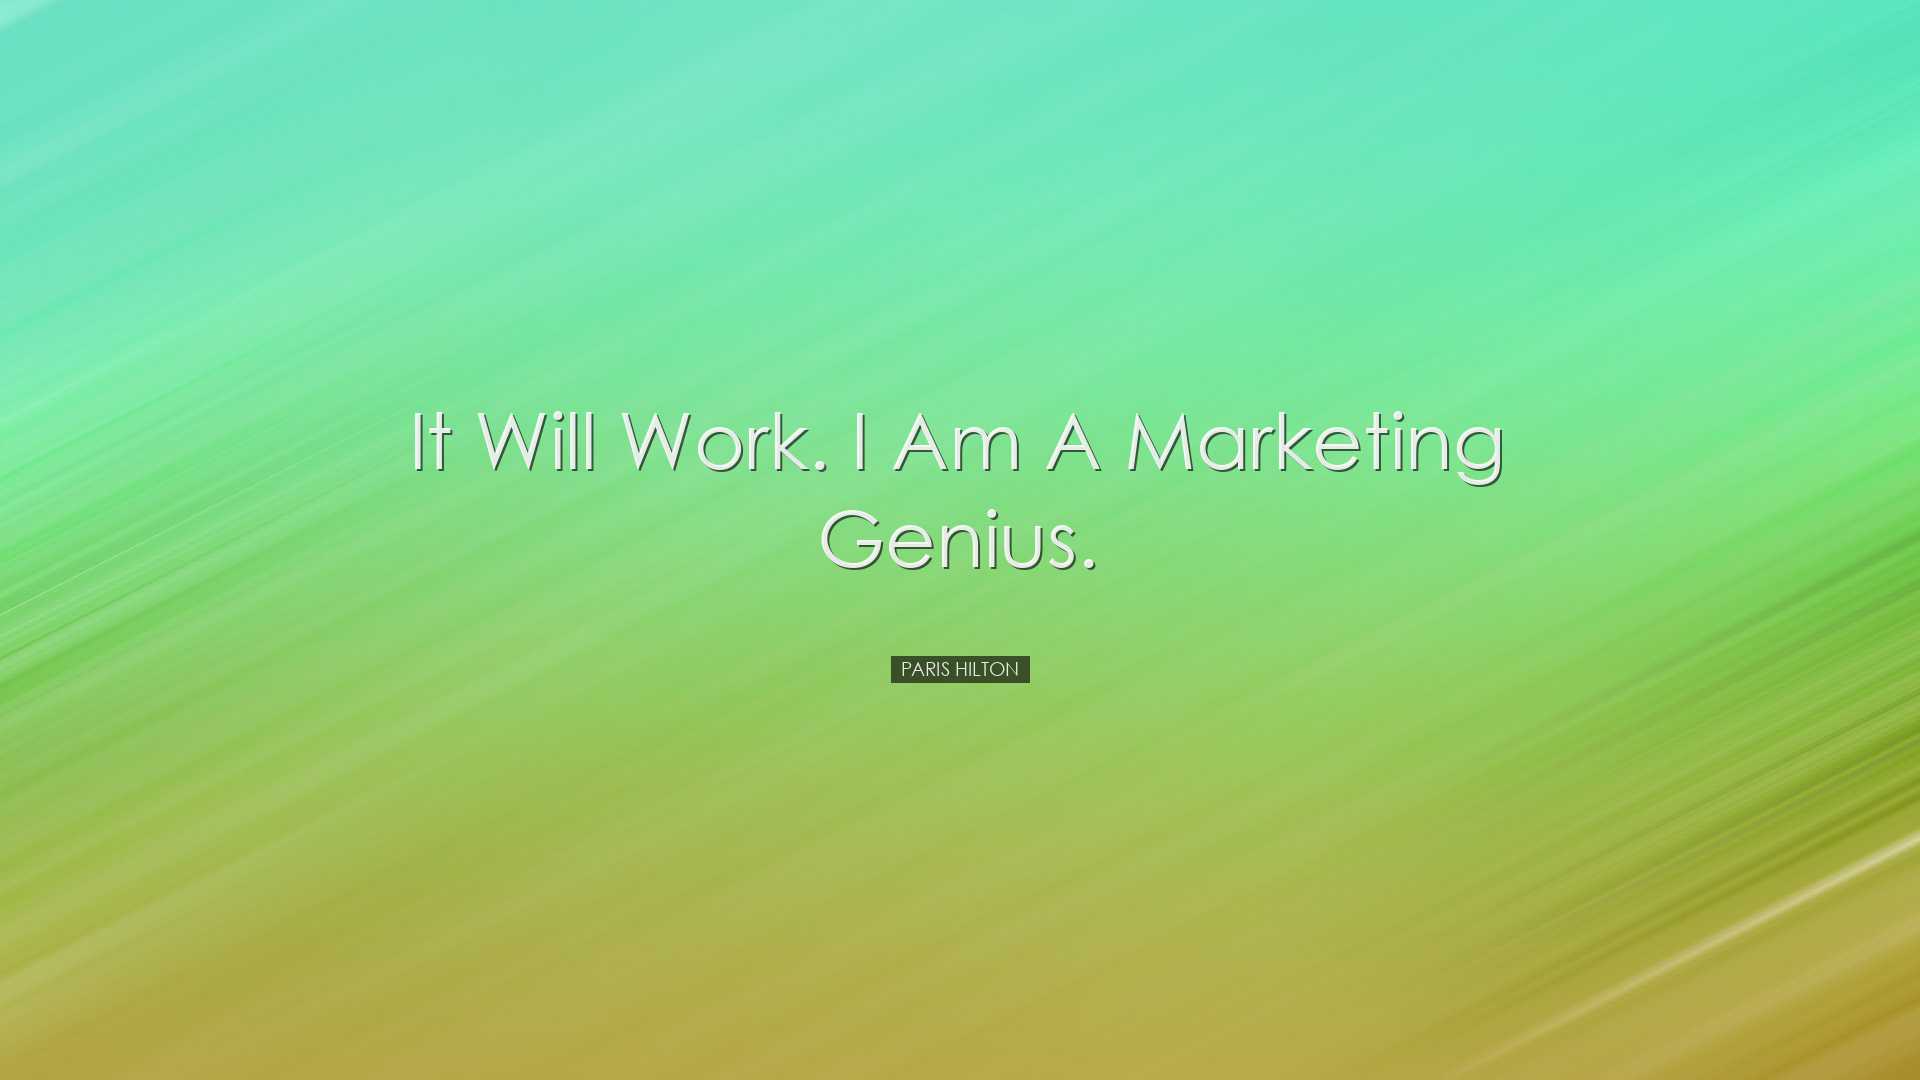 It will work. I am a marketing genius. - Paris Hilton